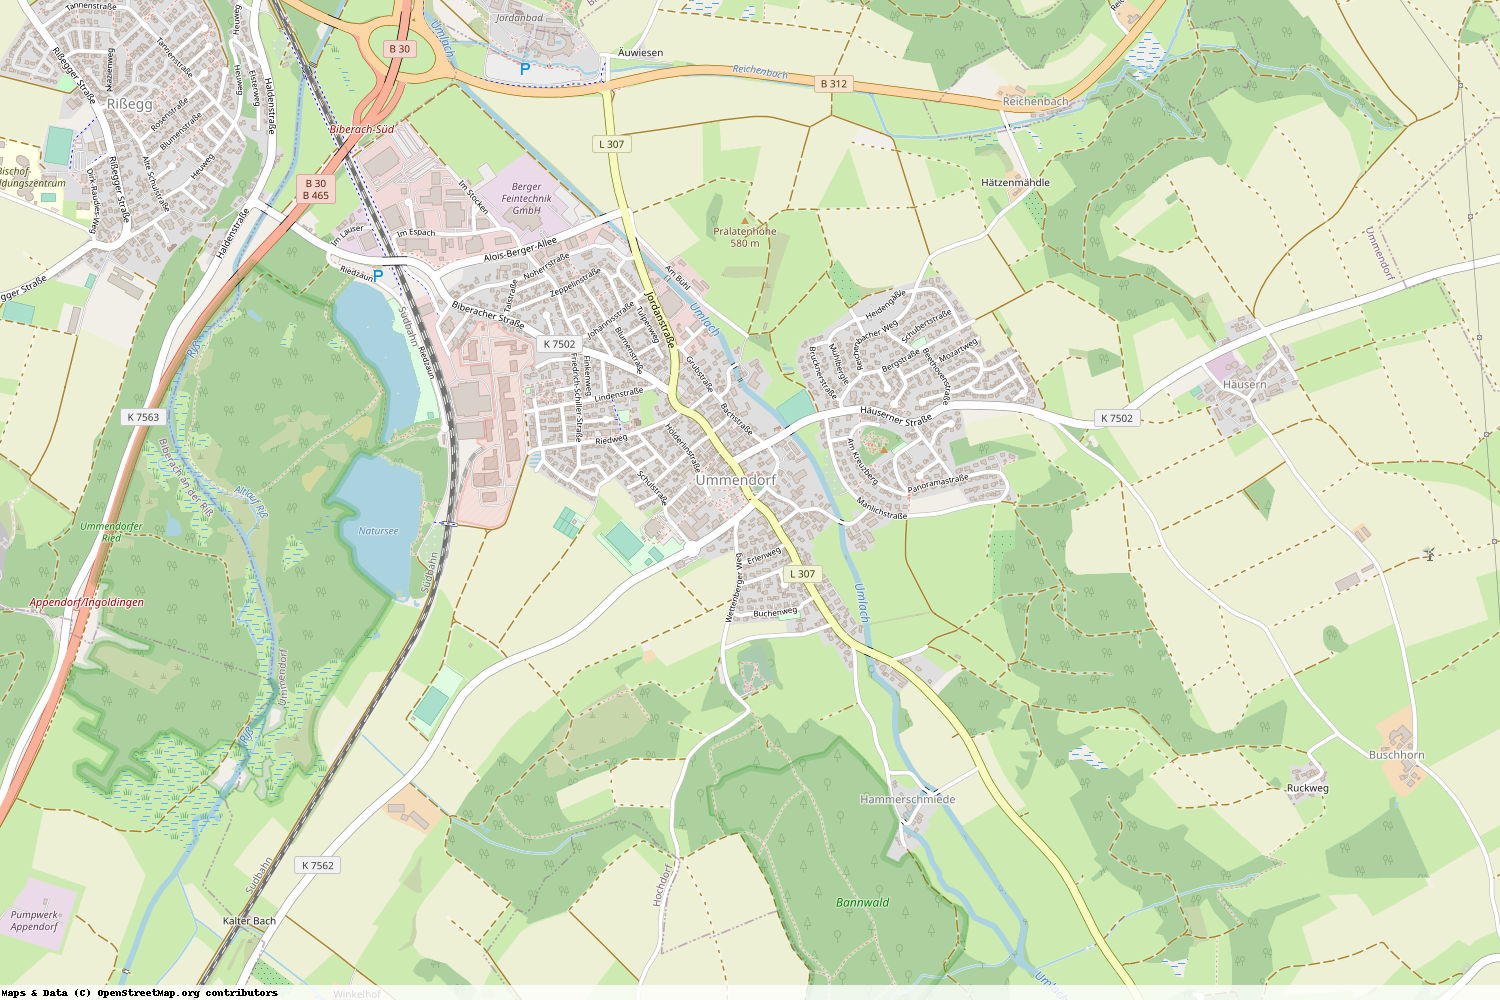 Ist gerade Stromausfall in Baden-Württemberg - Biberach - Ummendorf?